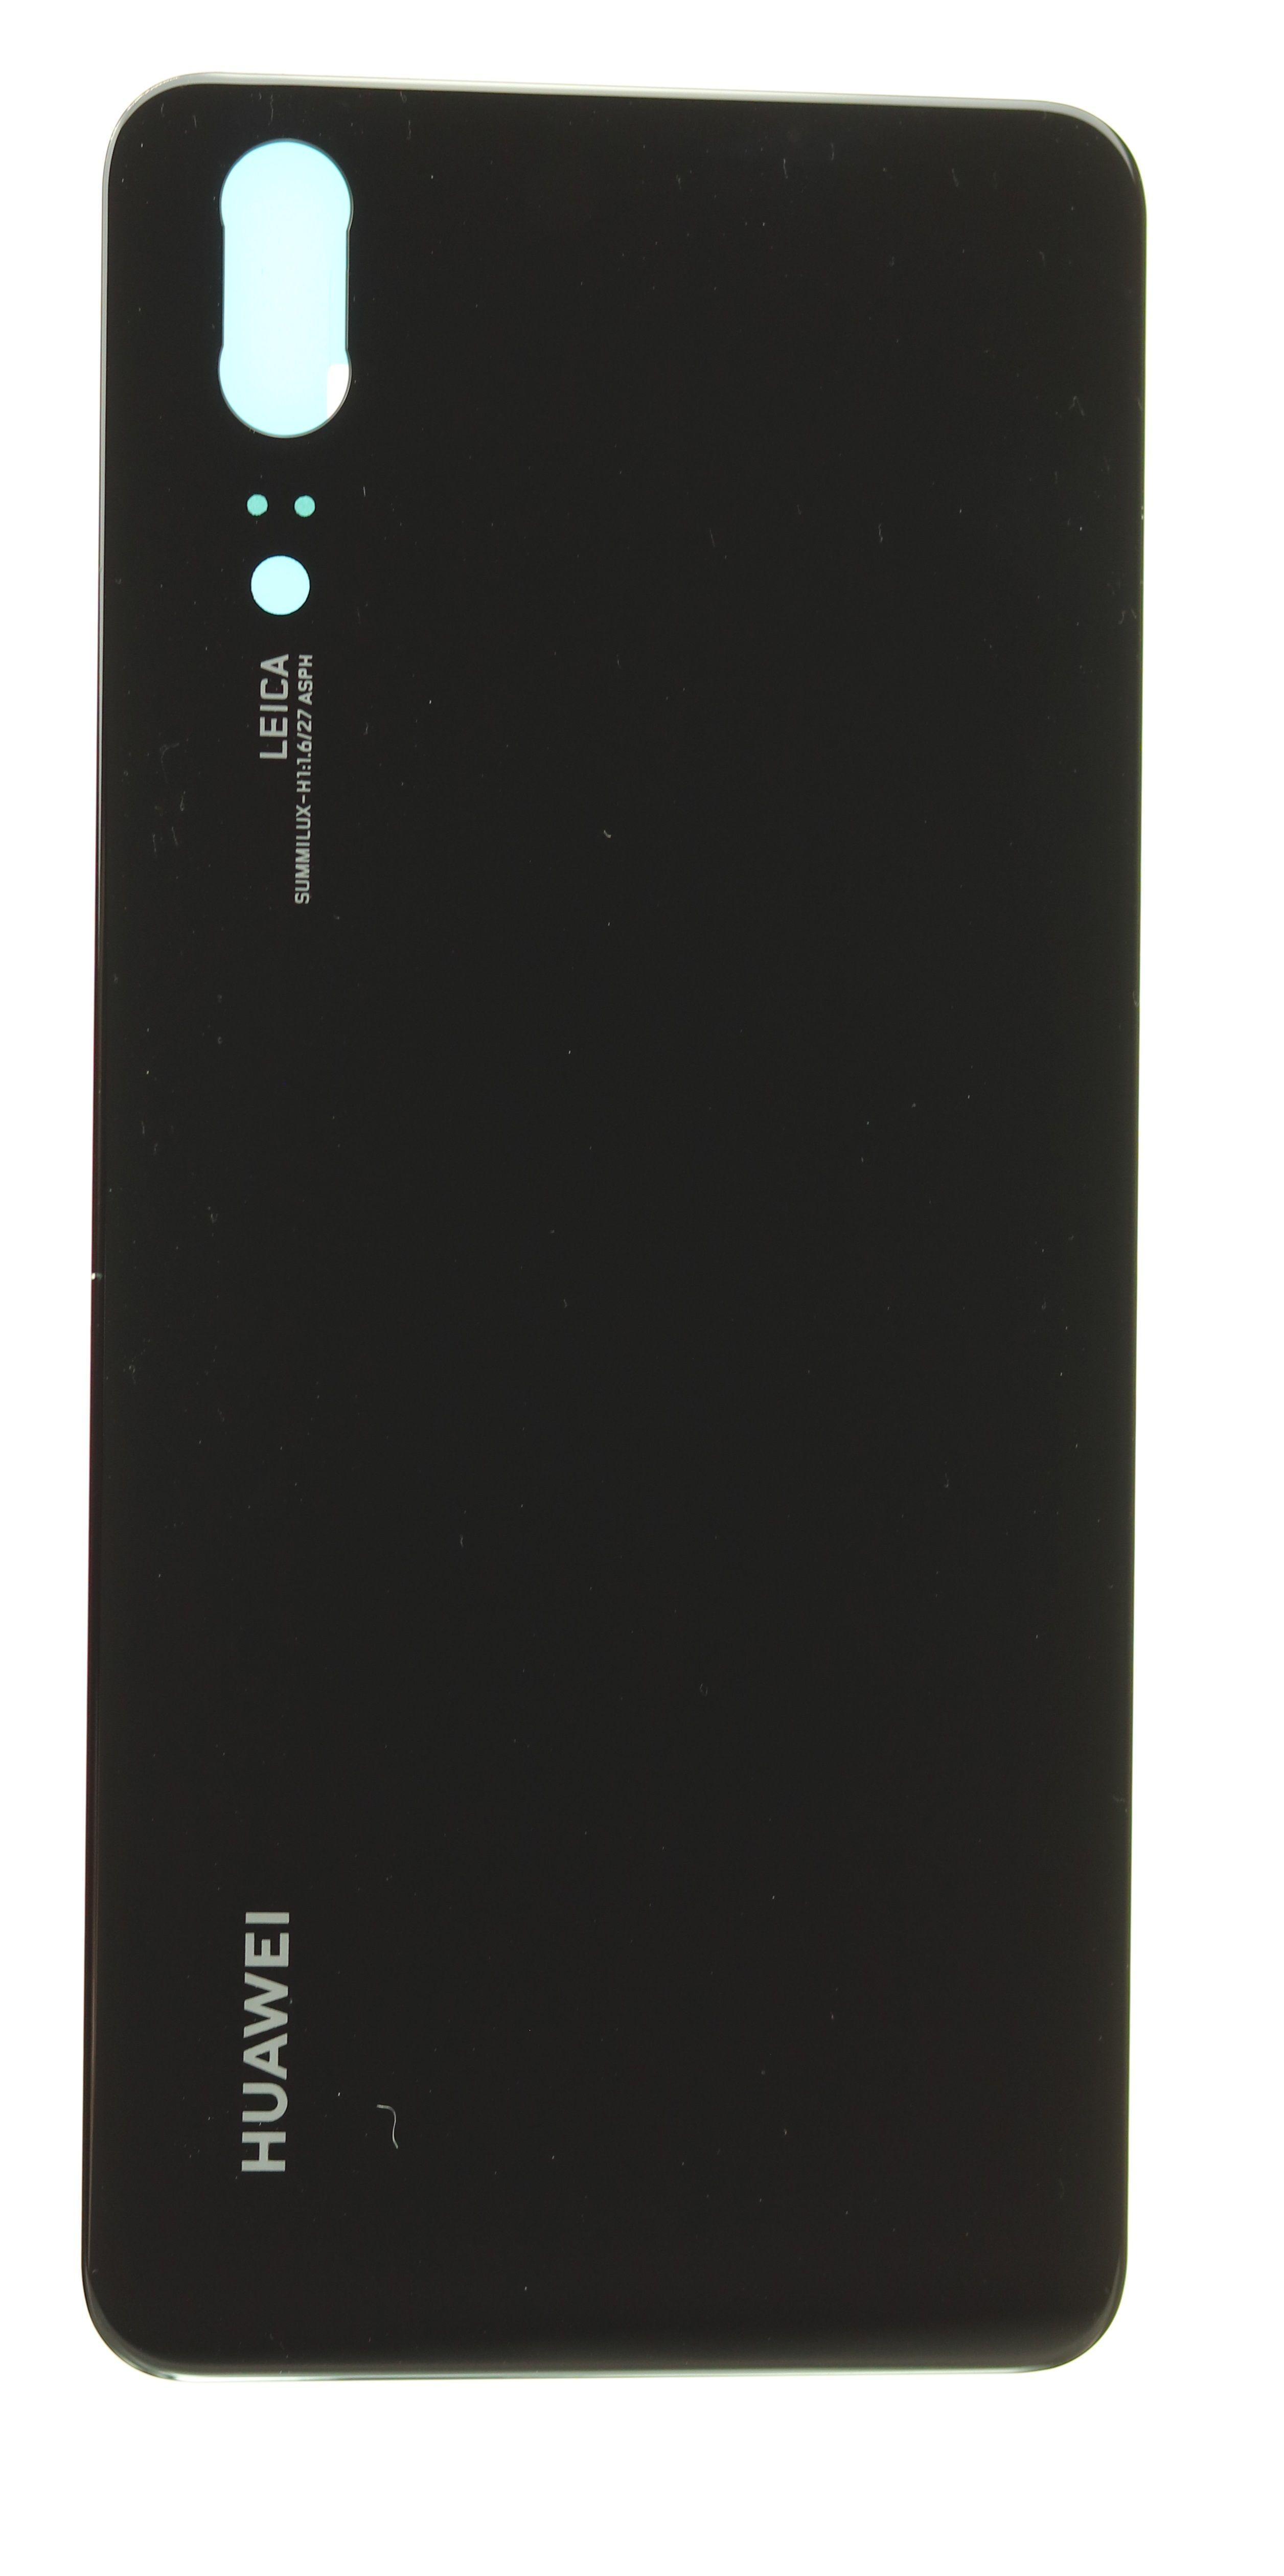 Kryt baterie Huawei P20 černý